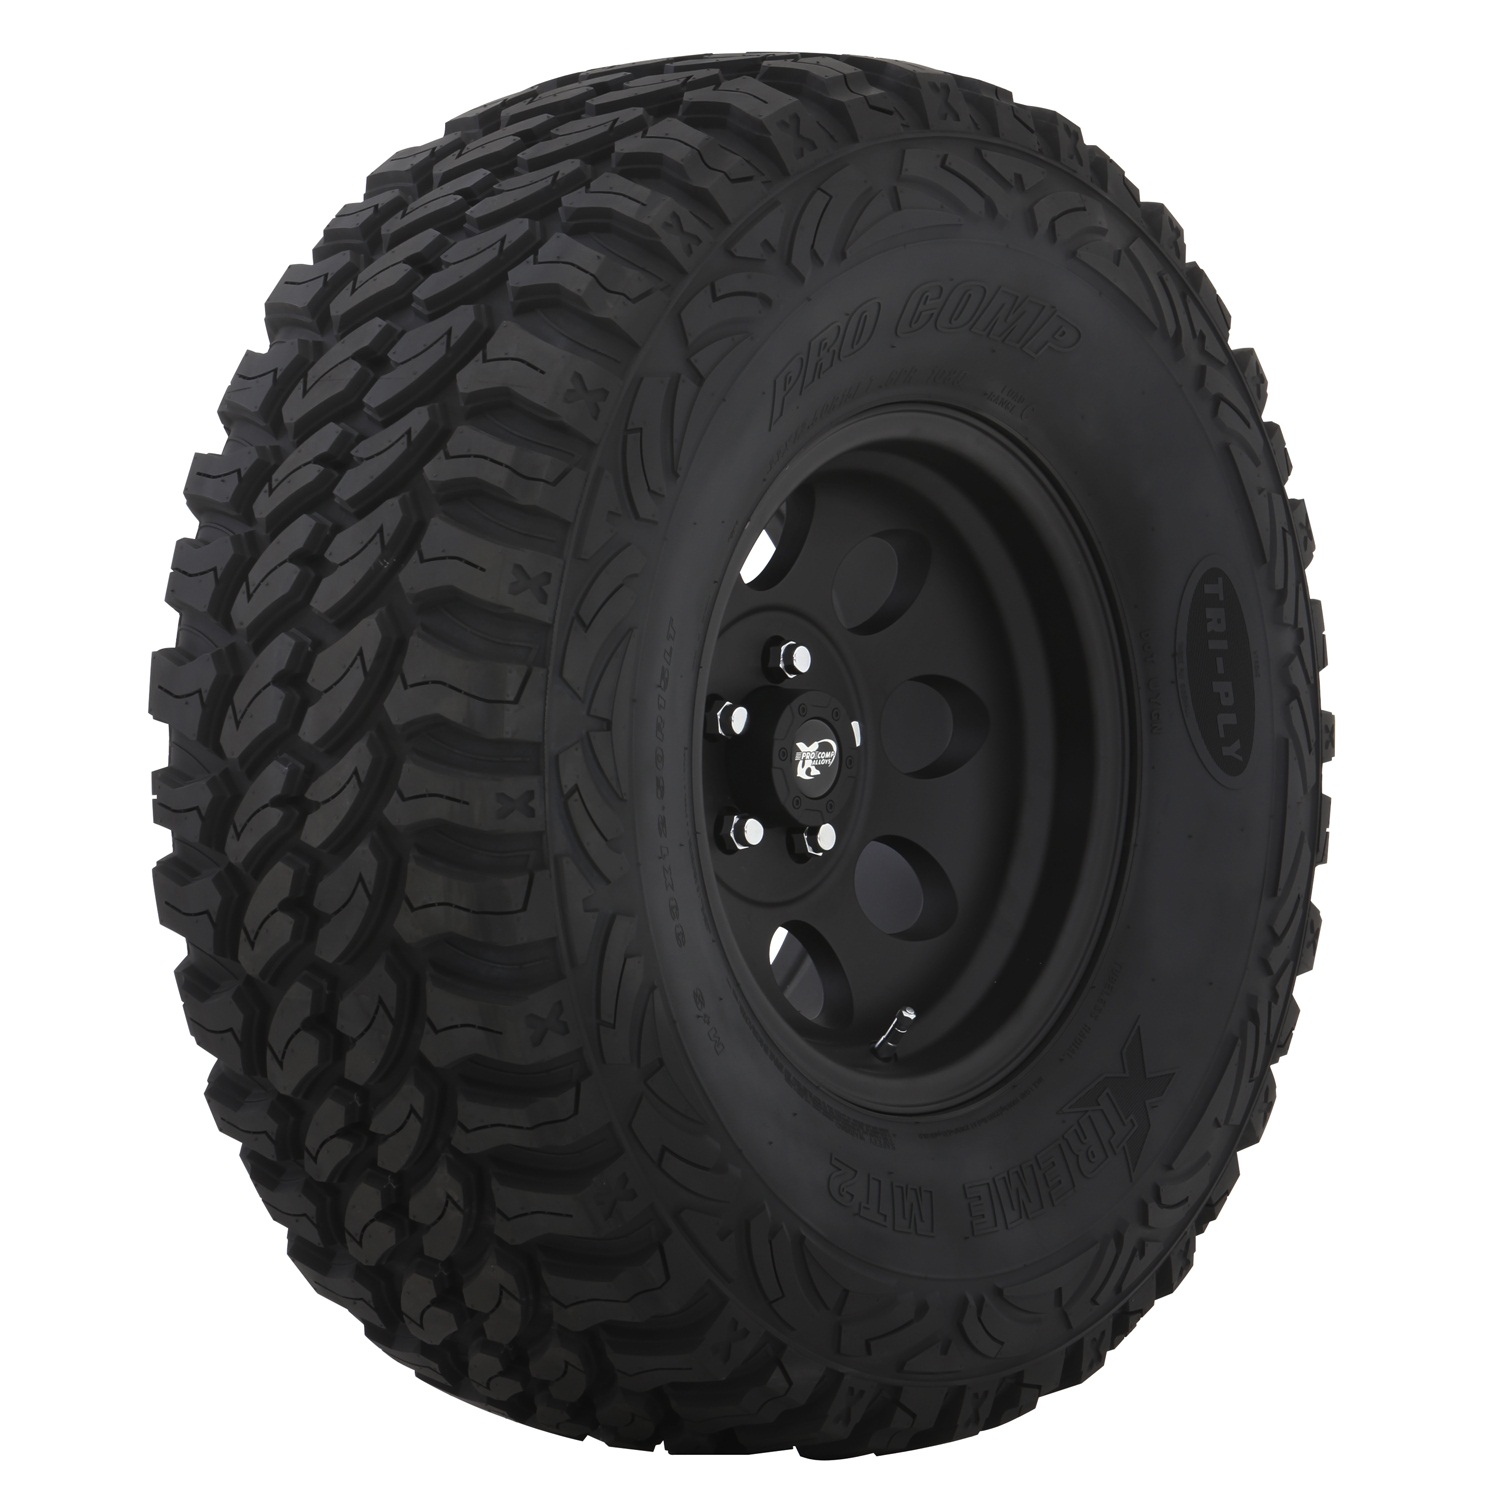 Pro Comp Tires Pro Comp Tires 77315 Pro Comp Xtreme Mud Terrain 2; Tire